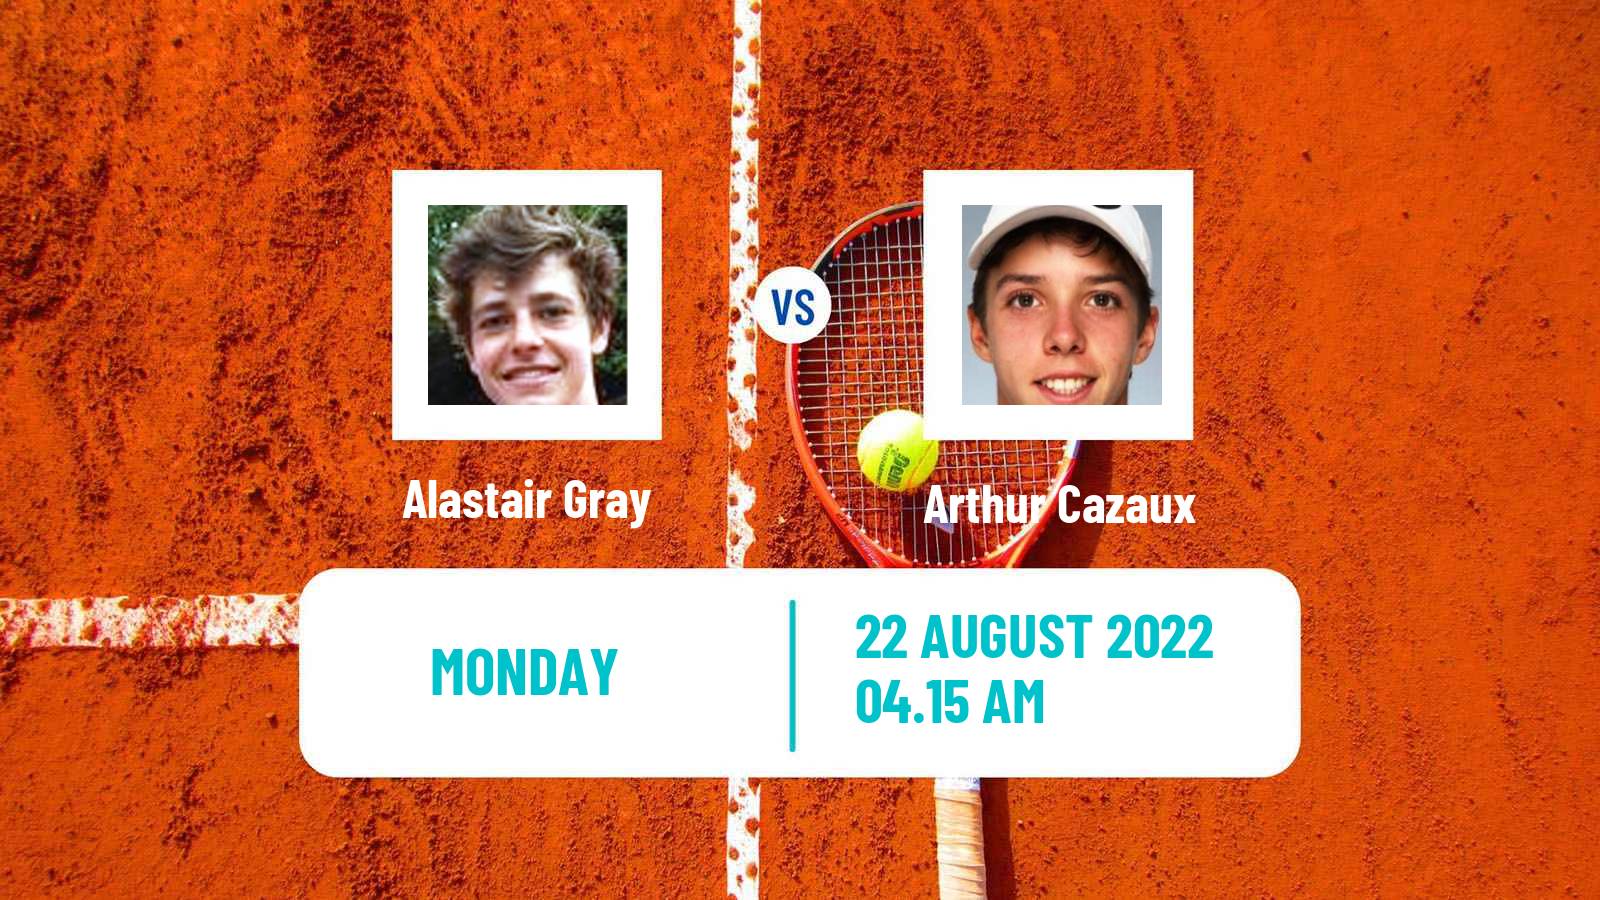 Tennis ATP Challenger Alastair Gray - Arthur Cazaux